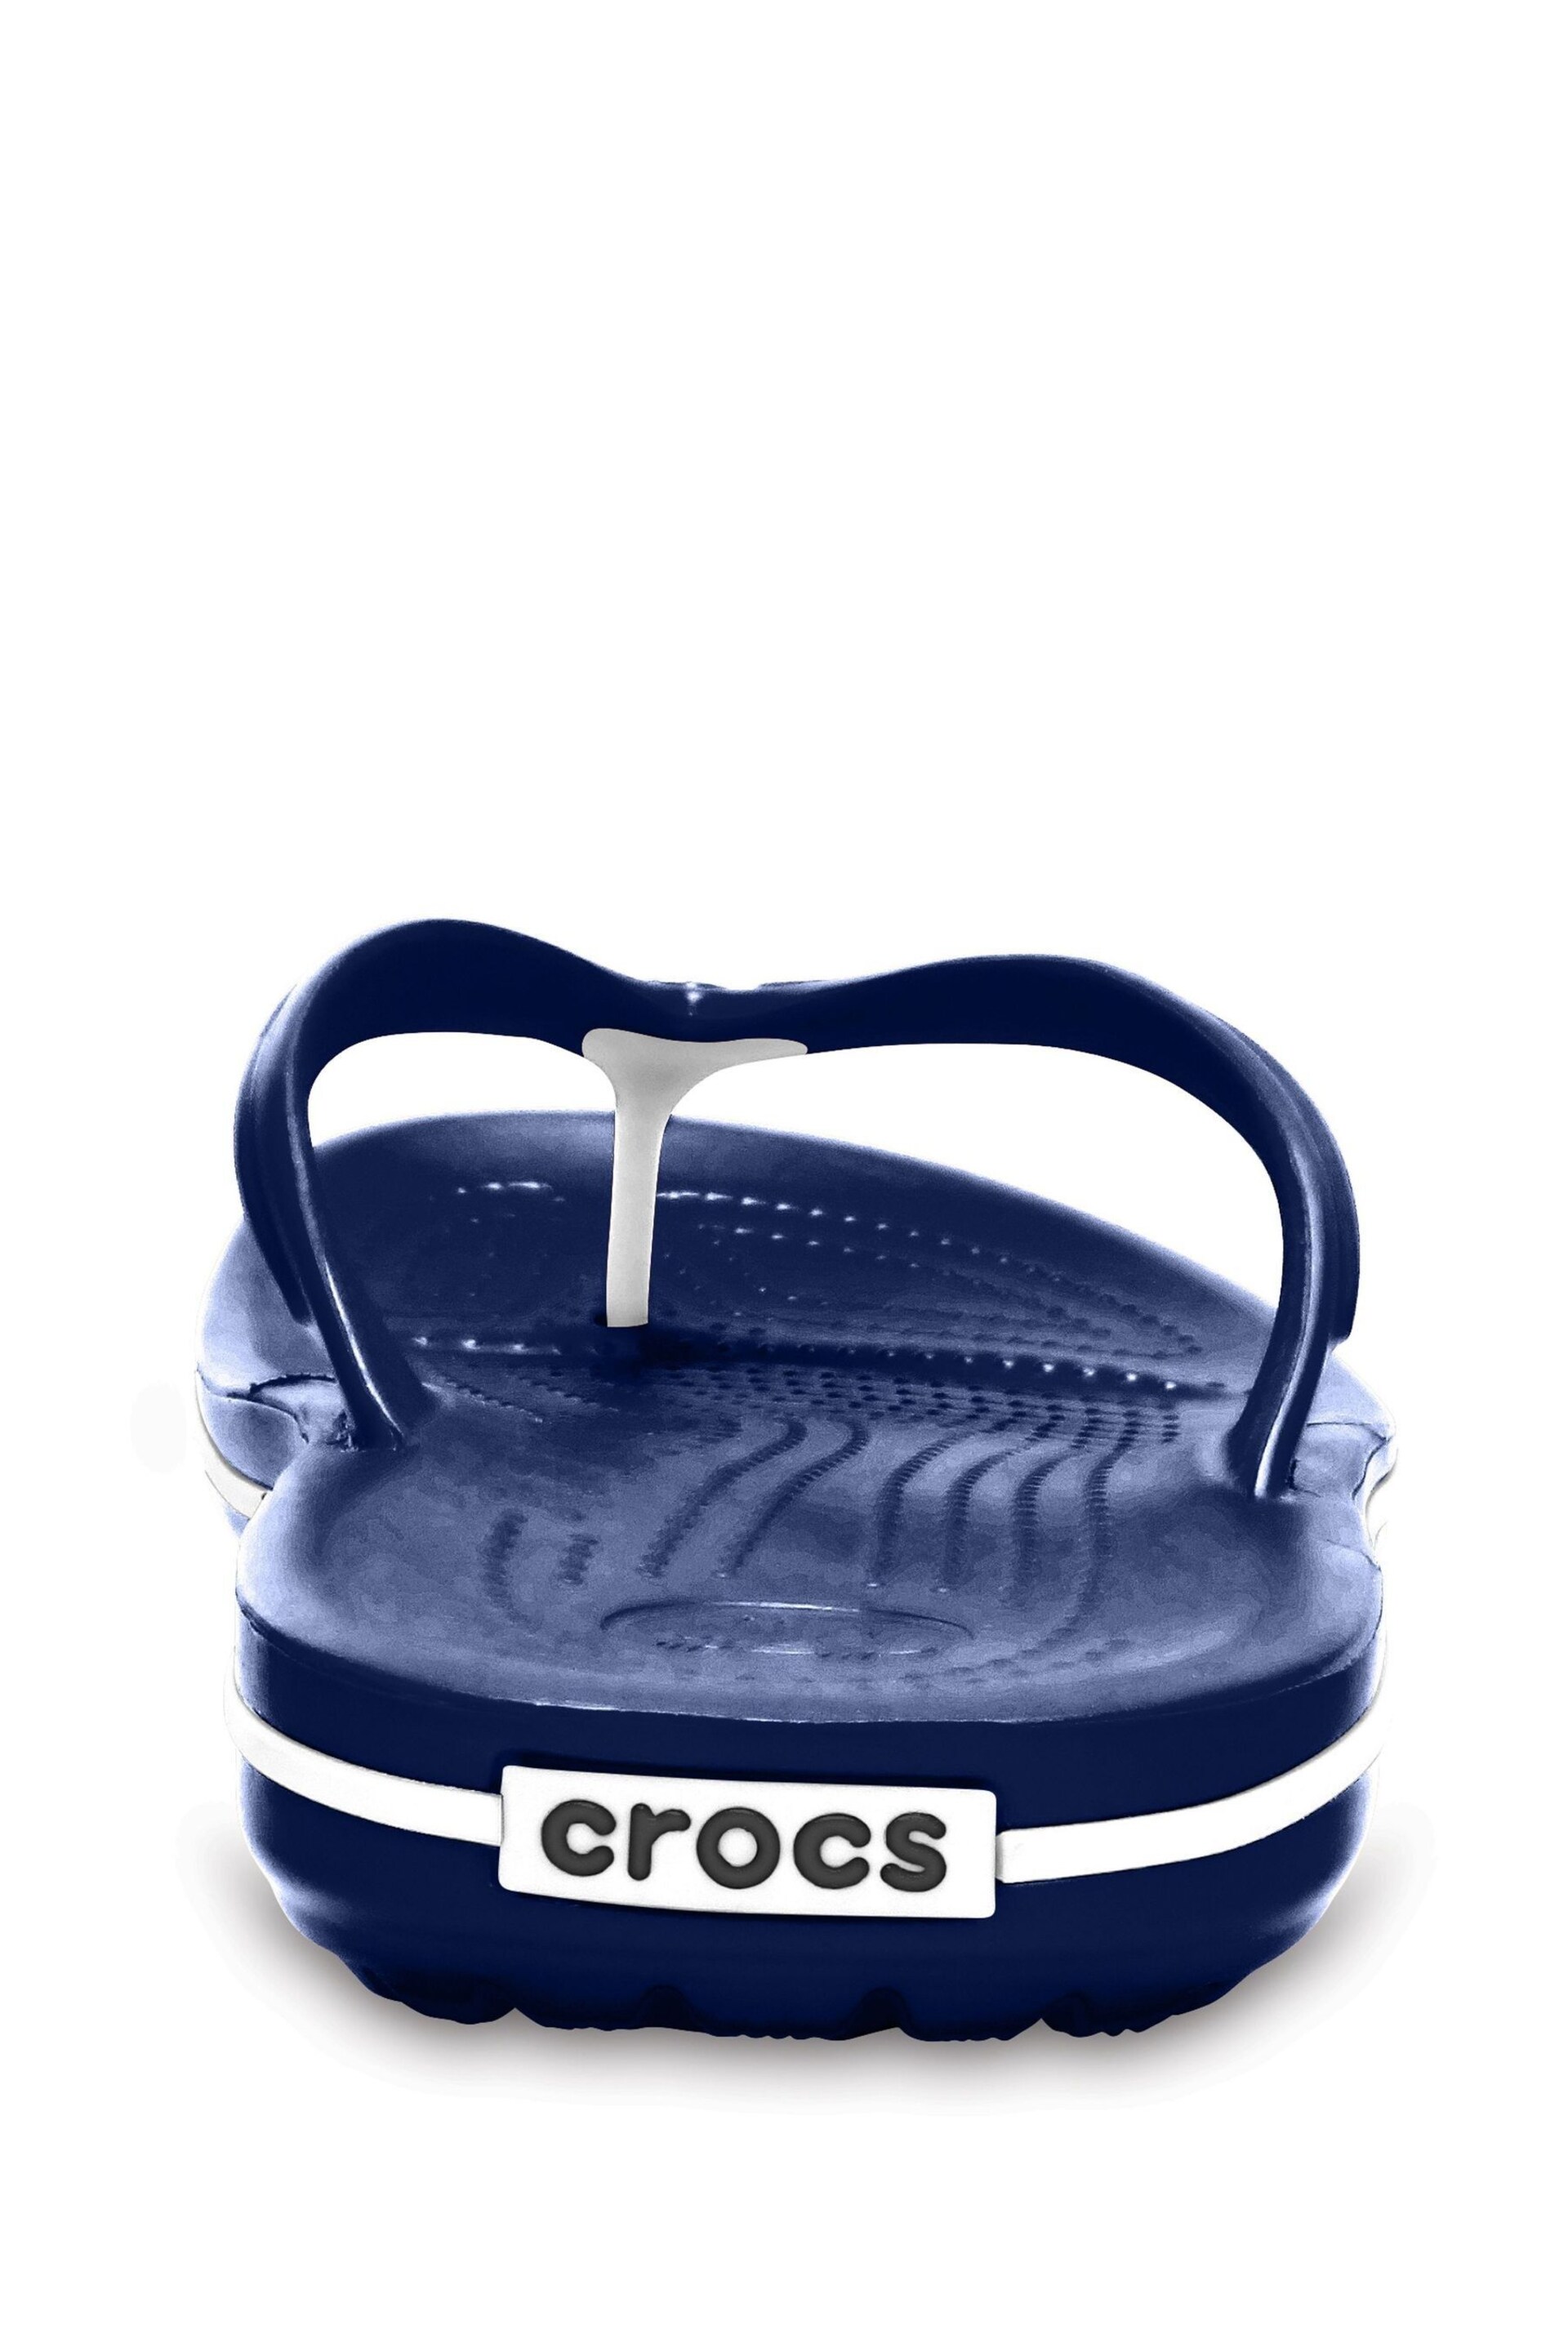 Crocs Crocband Black Flip - Image 3 of 4